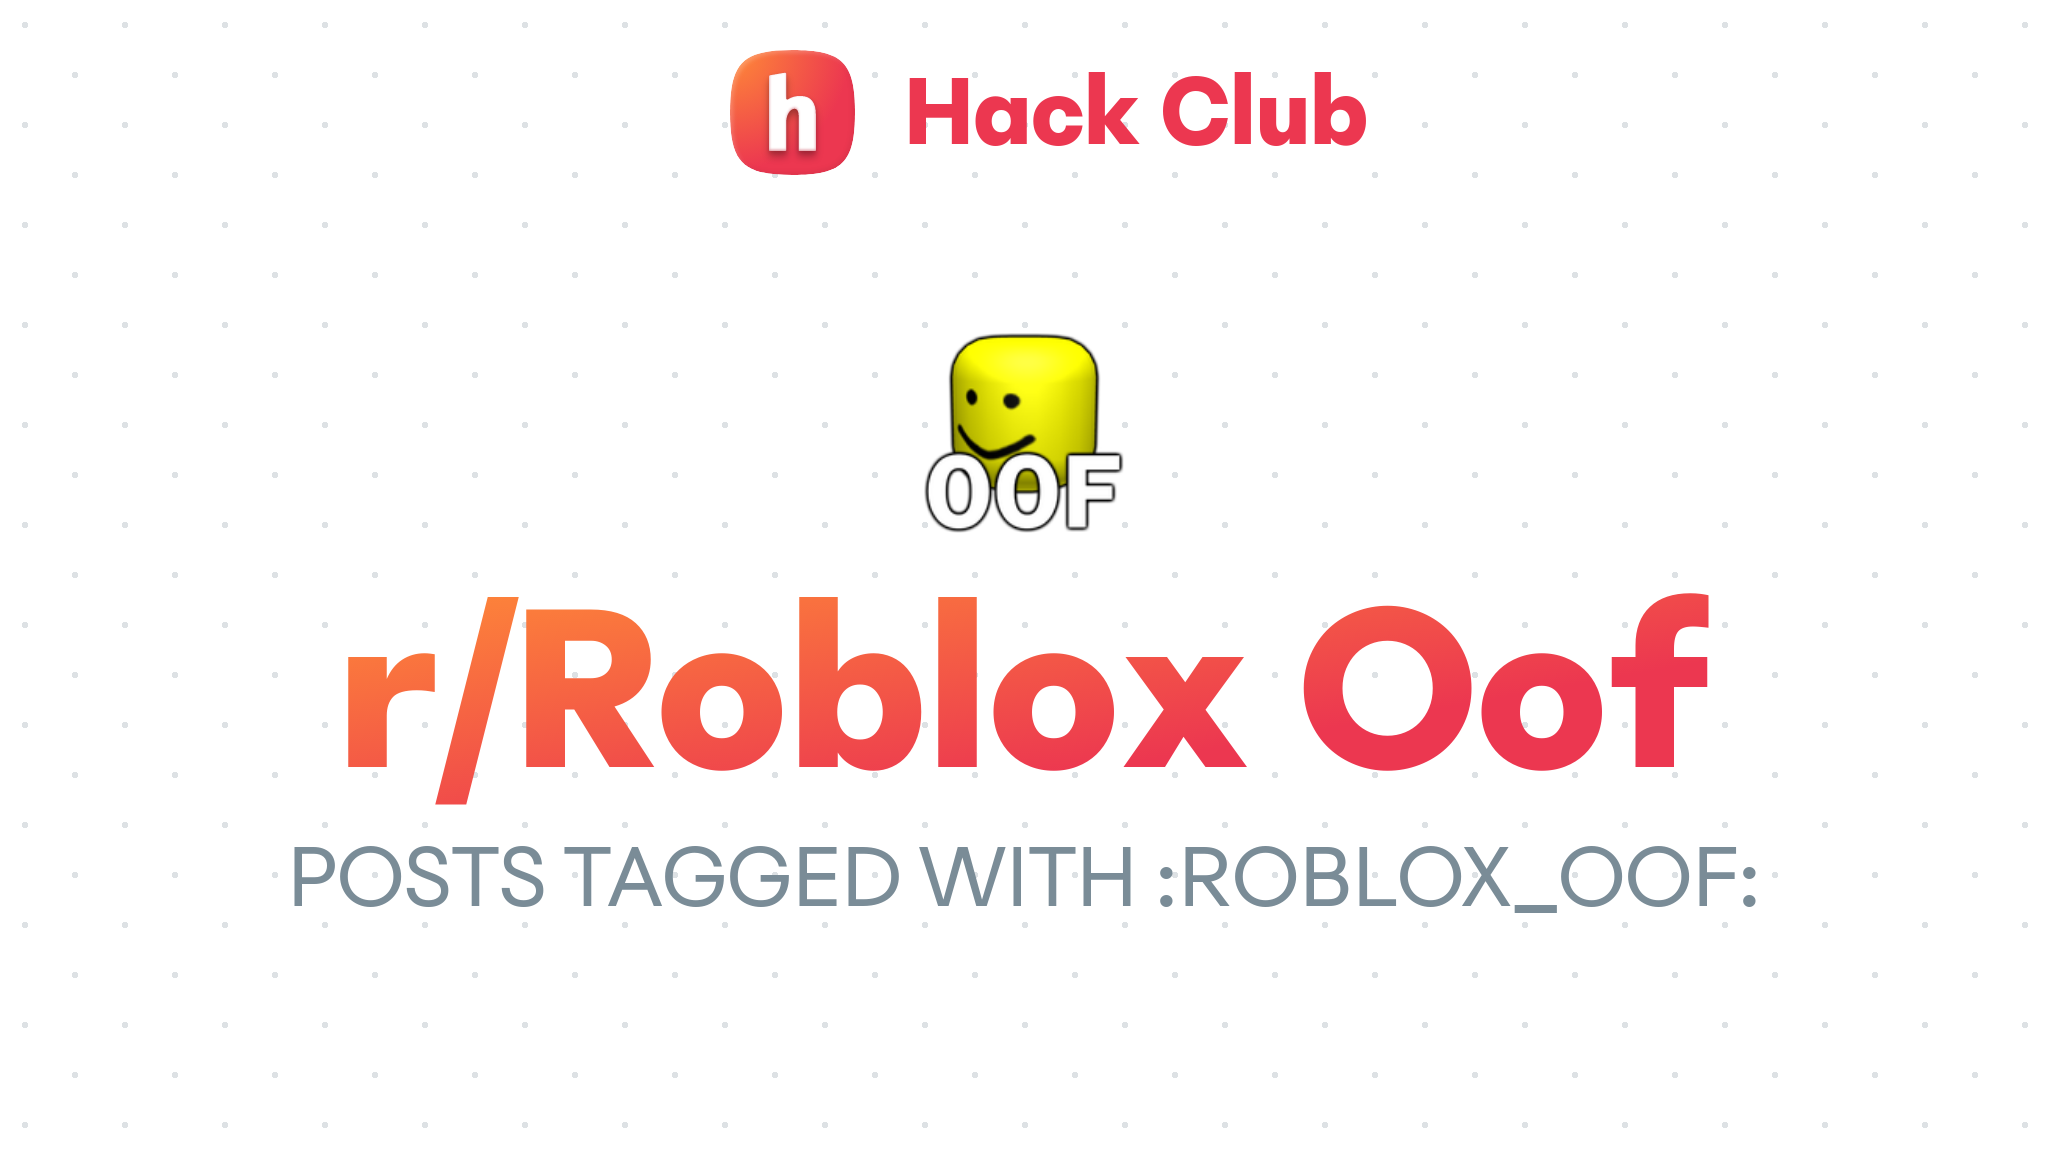 Roblox Oof Posts Hack Club Scrapbook - roblox hack club